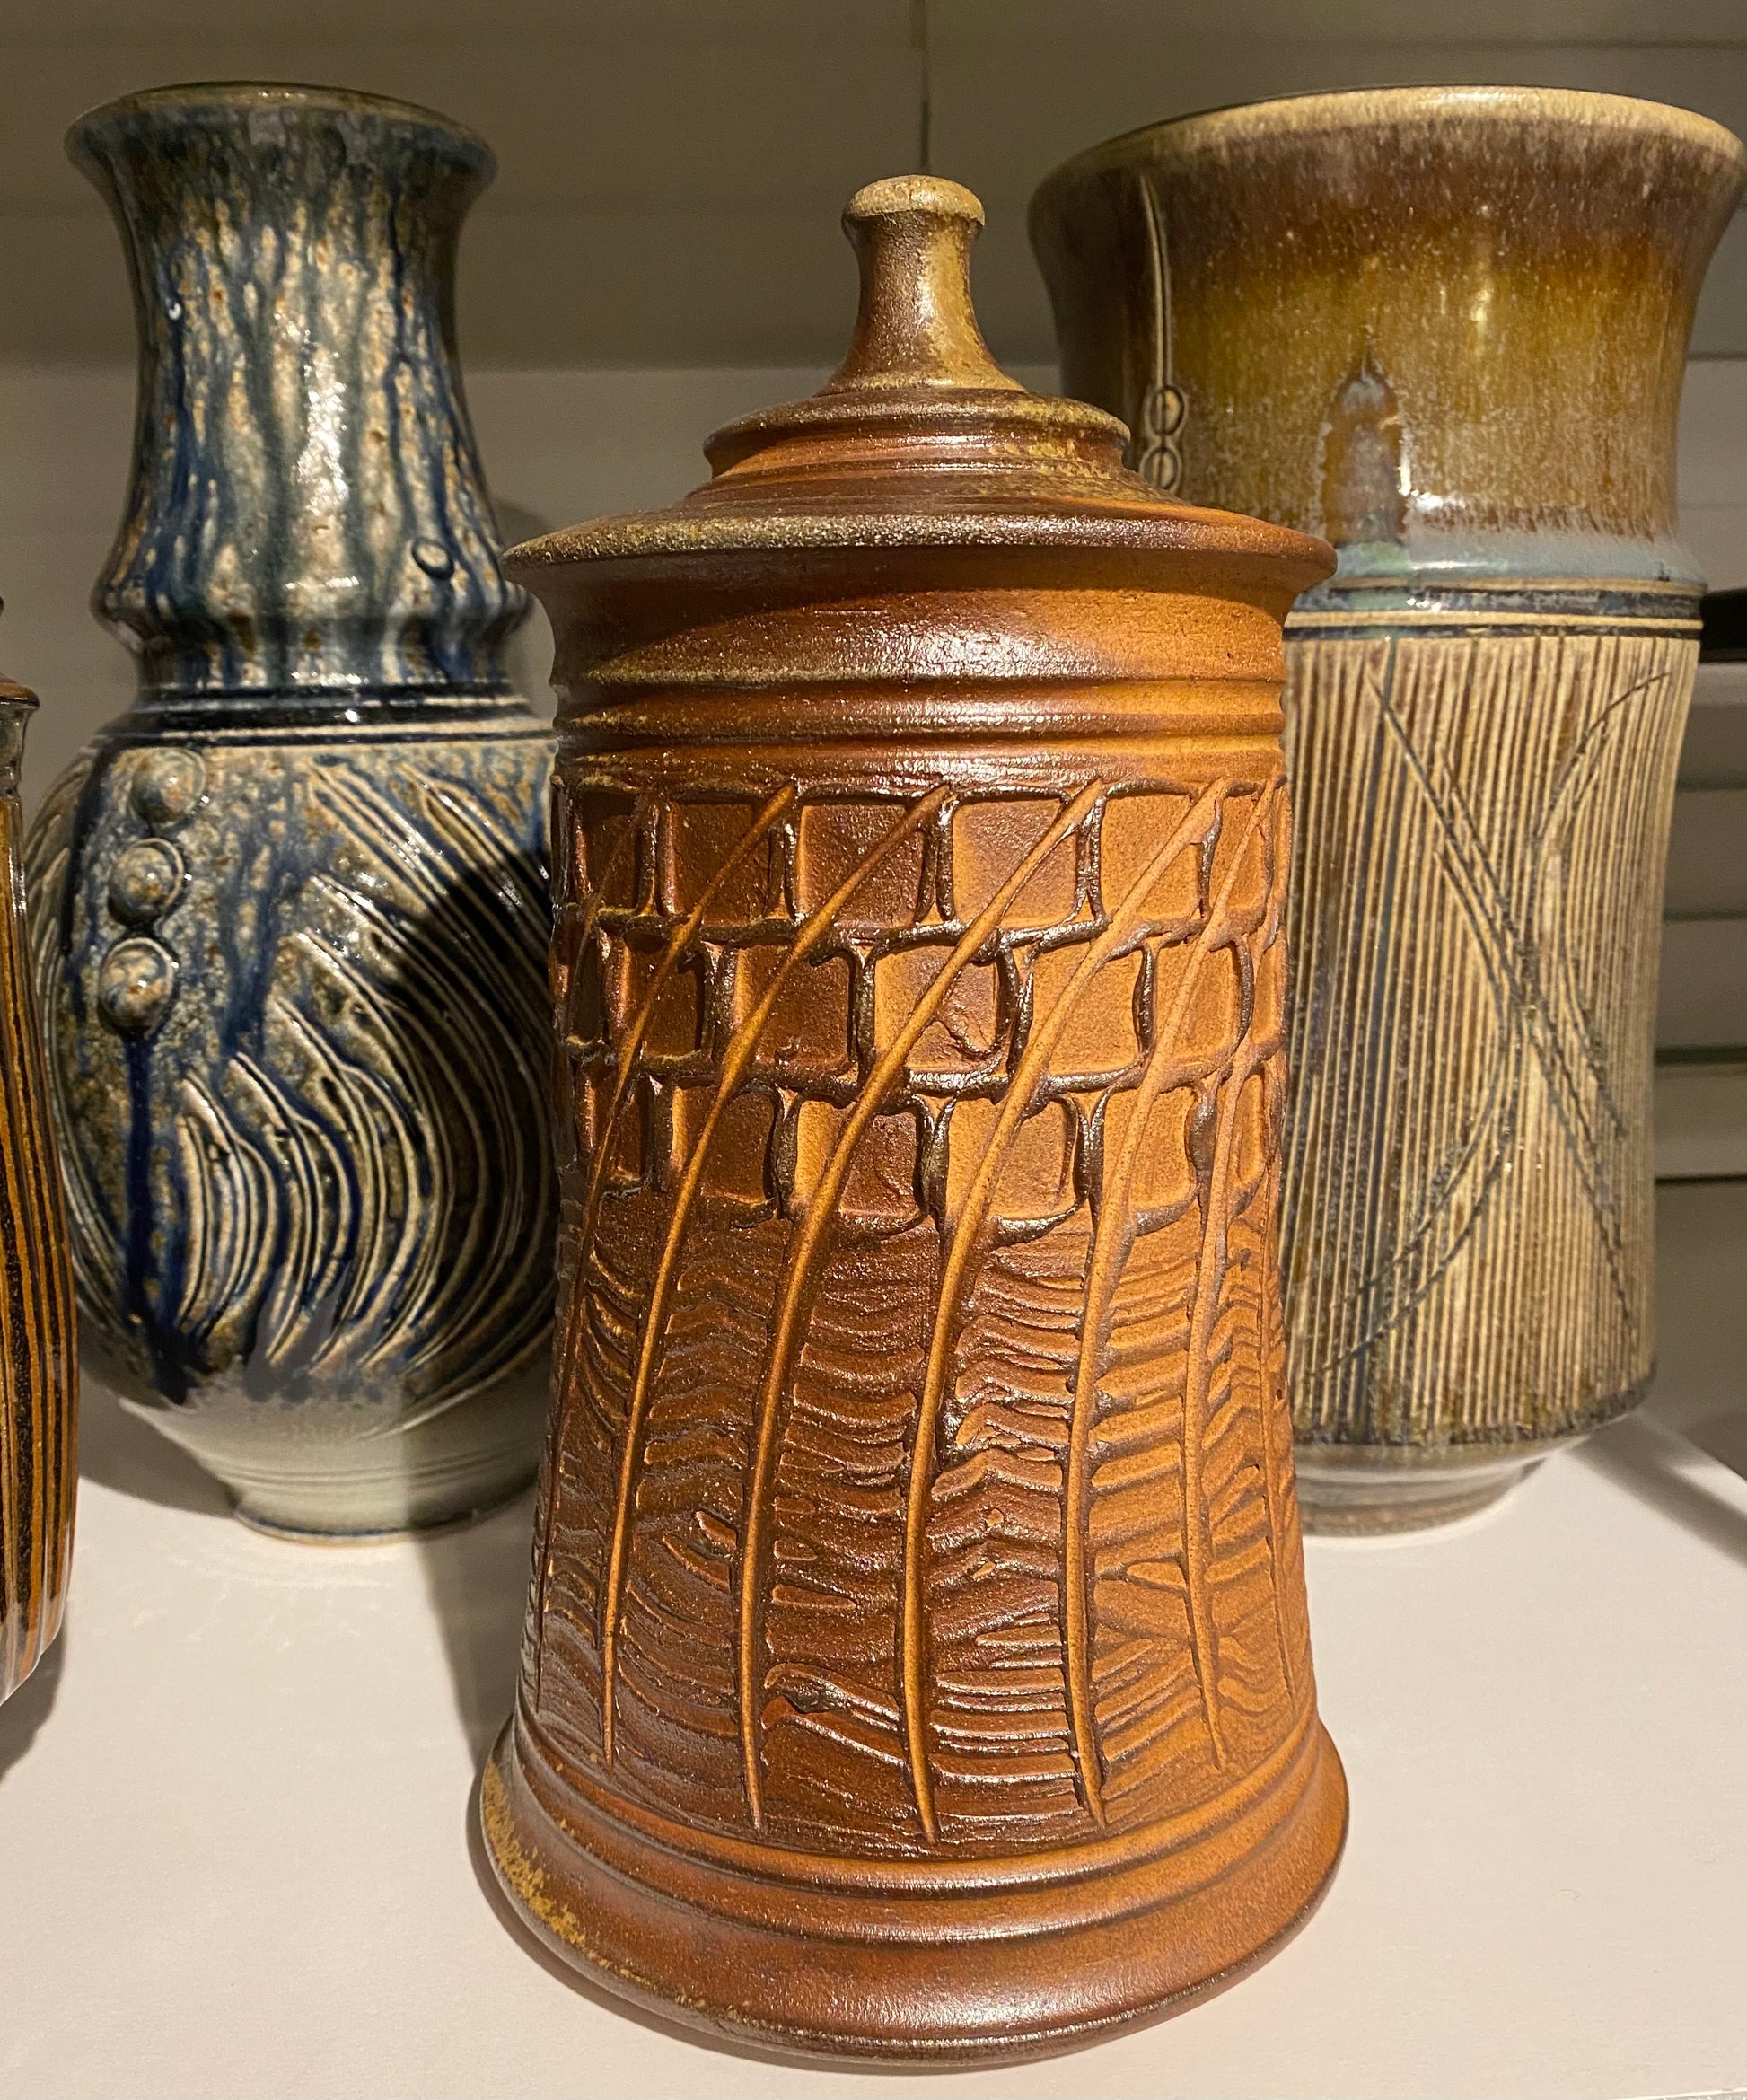 White Ceramic Vase Options & Decorating Ideas - Life On Virginia